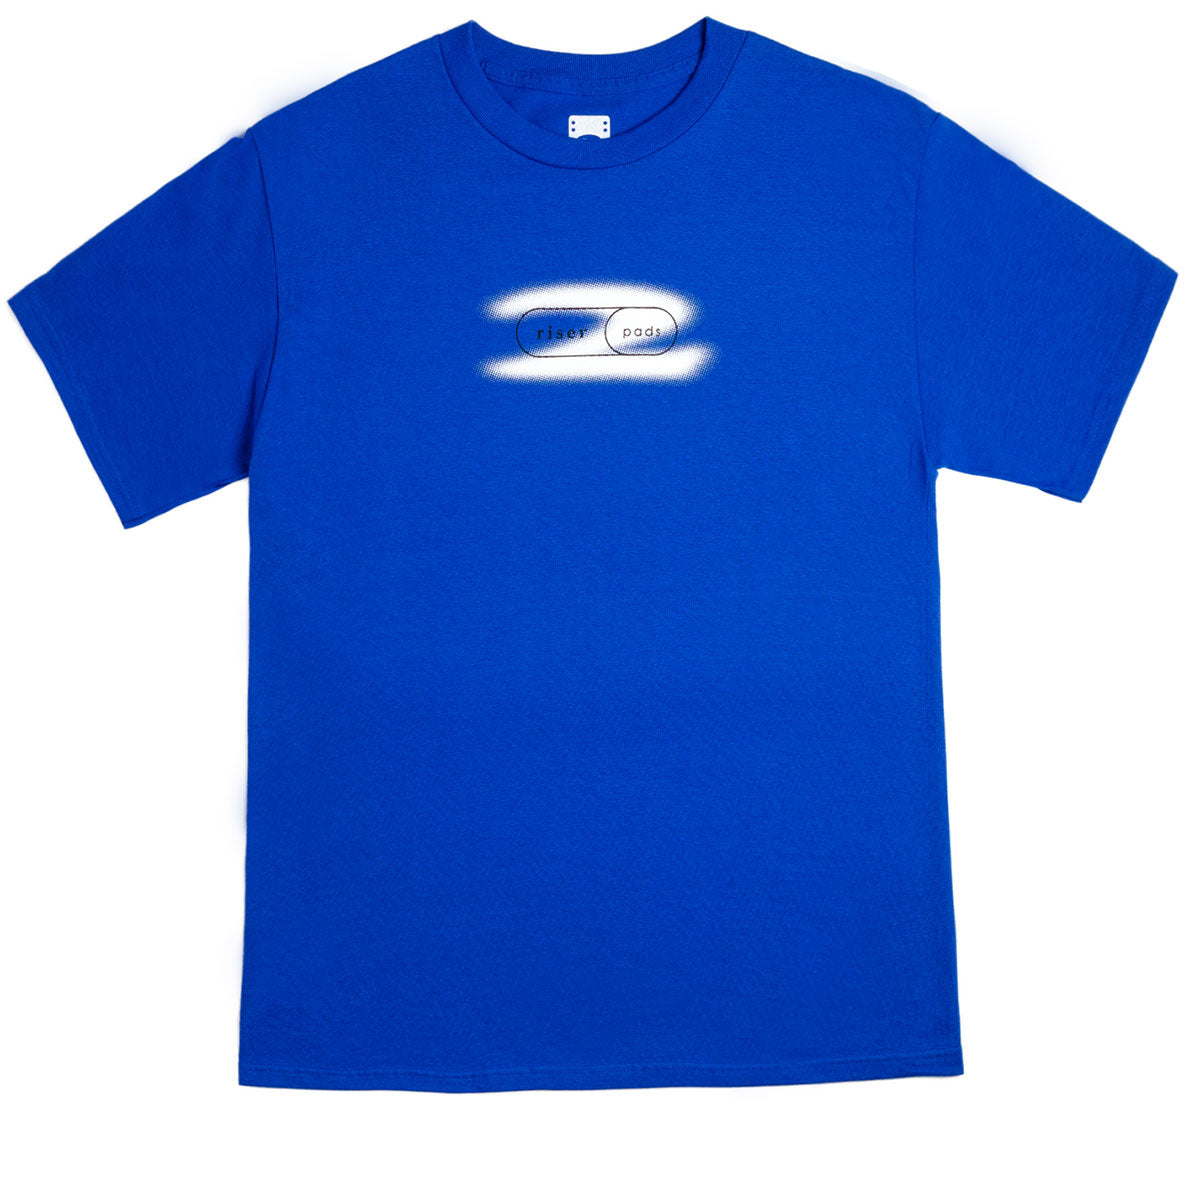 2 Riser Pads Band T-Shirt - Royal Blue image 1